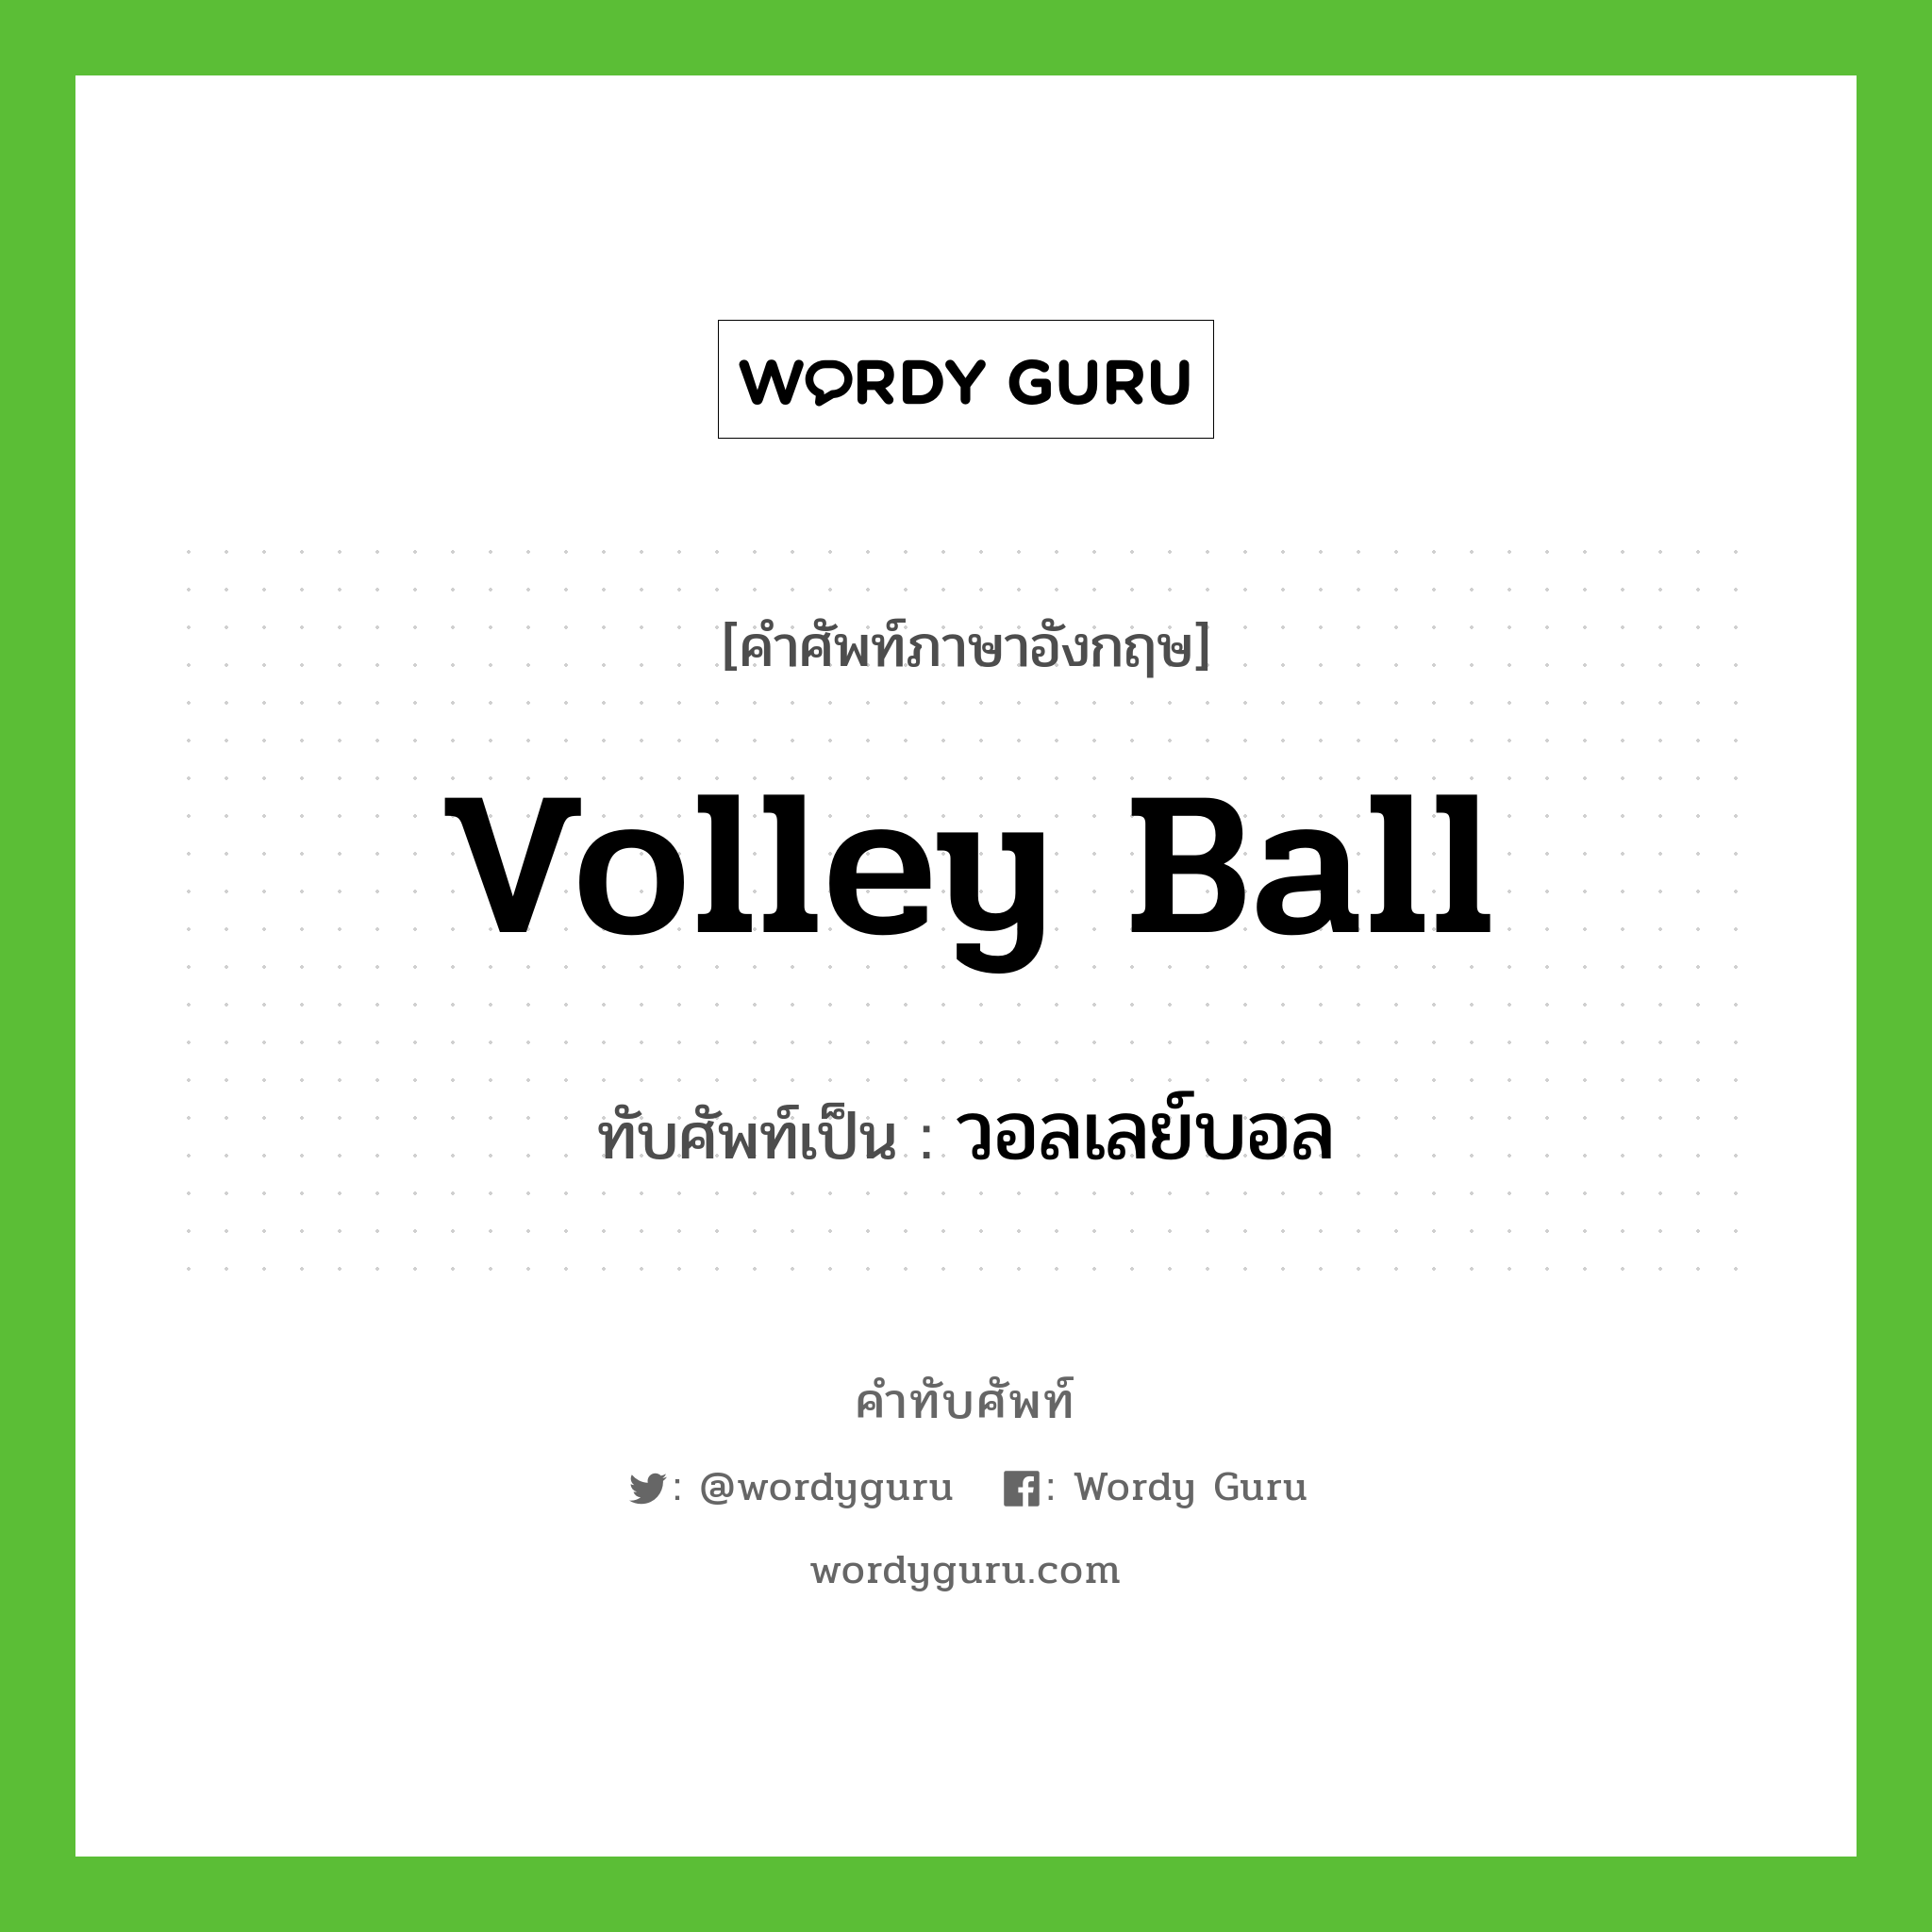 volley ball เขียนเป็นคำไทยว่าอะไร?, คำศัพท์ภาษาอังกฤษ volley ball ทับศัพท์เป็น วอลเลย์บอล